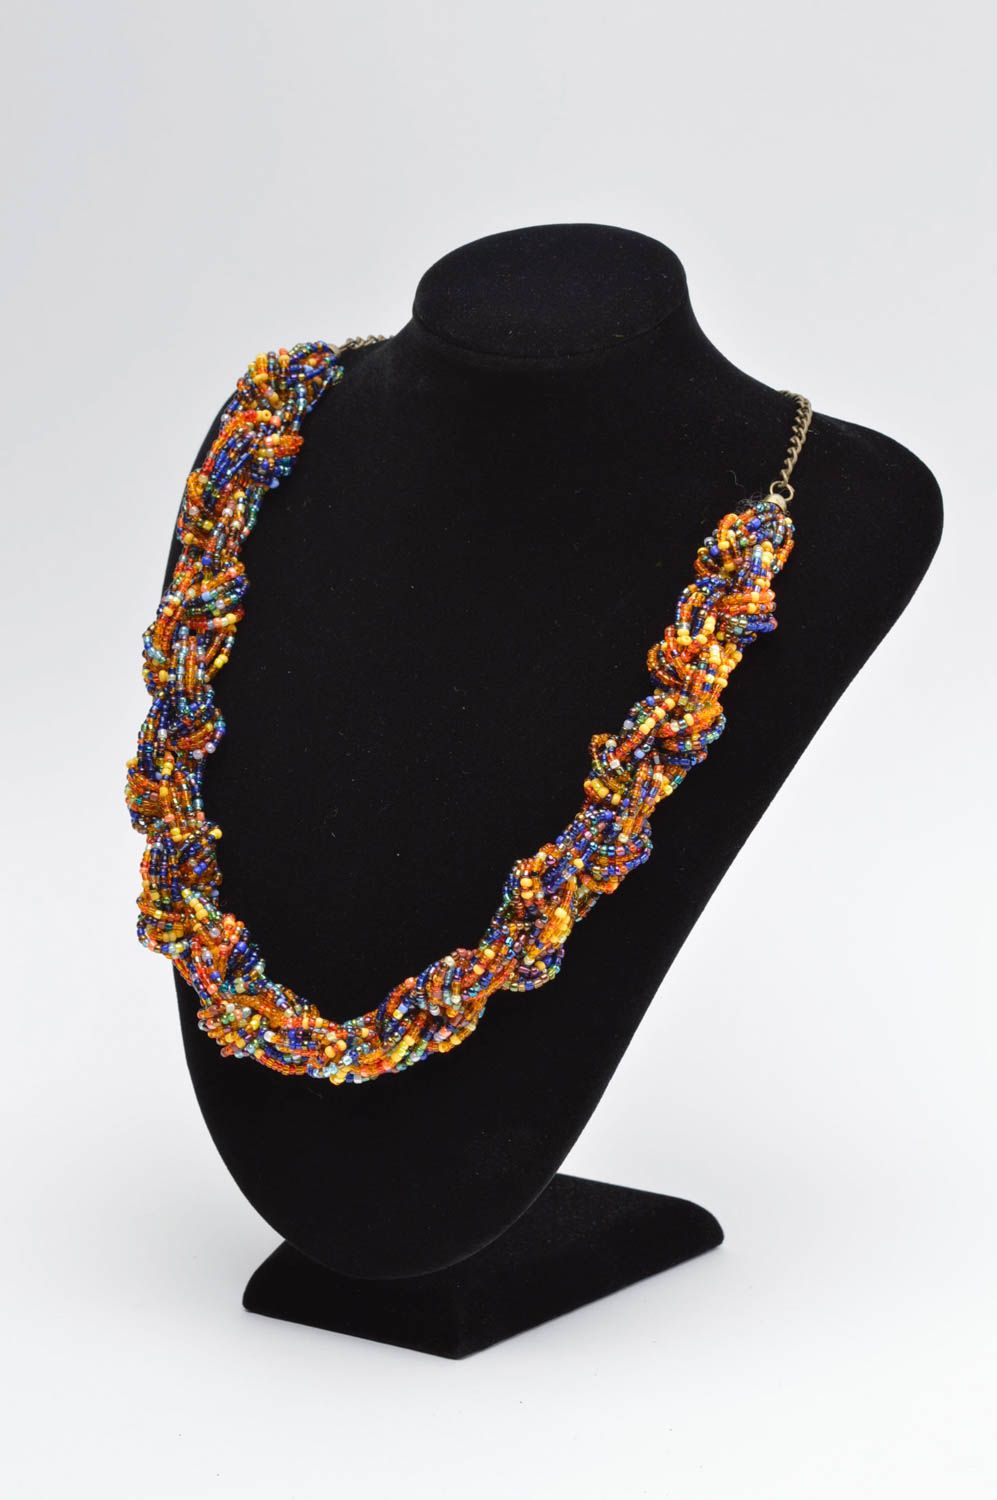 Handmade necklace bead necklace designer accessory beautiful jewelry gift ideas photo 5